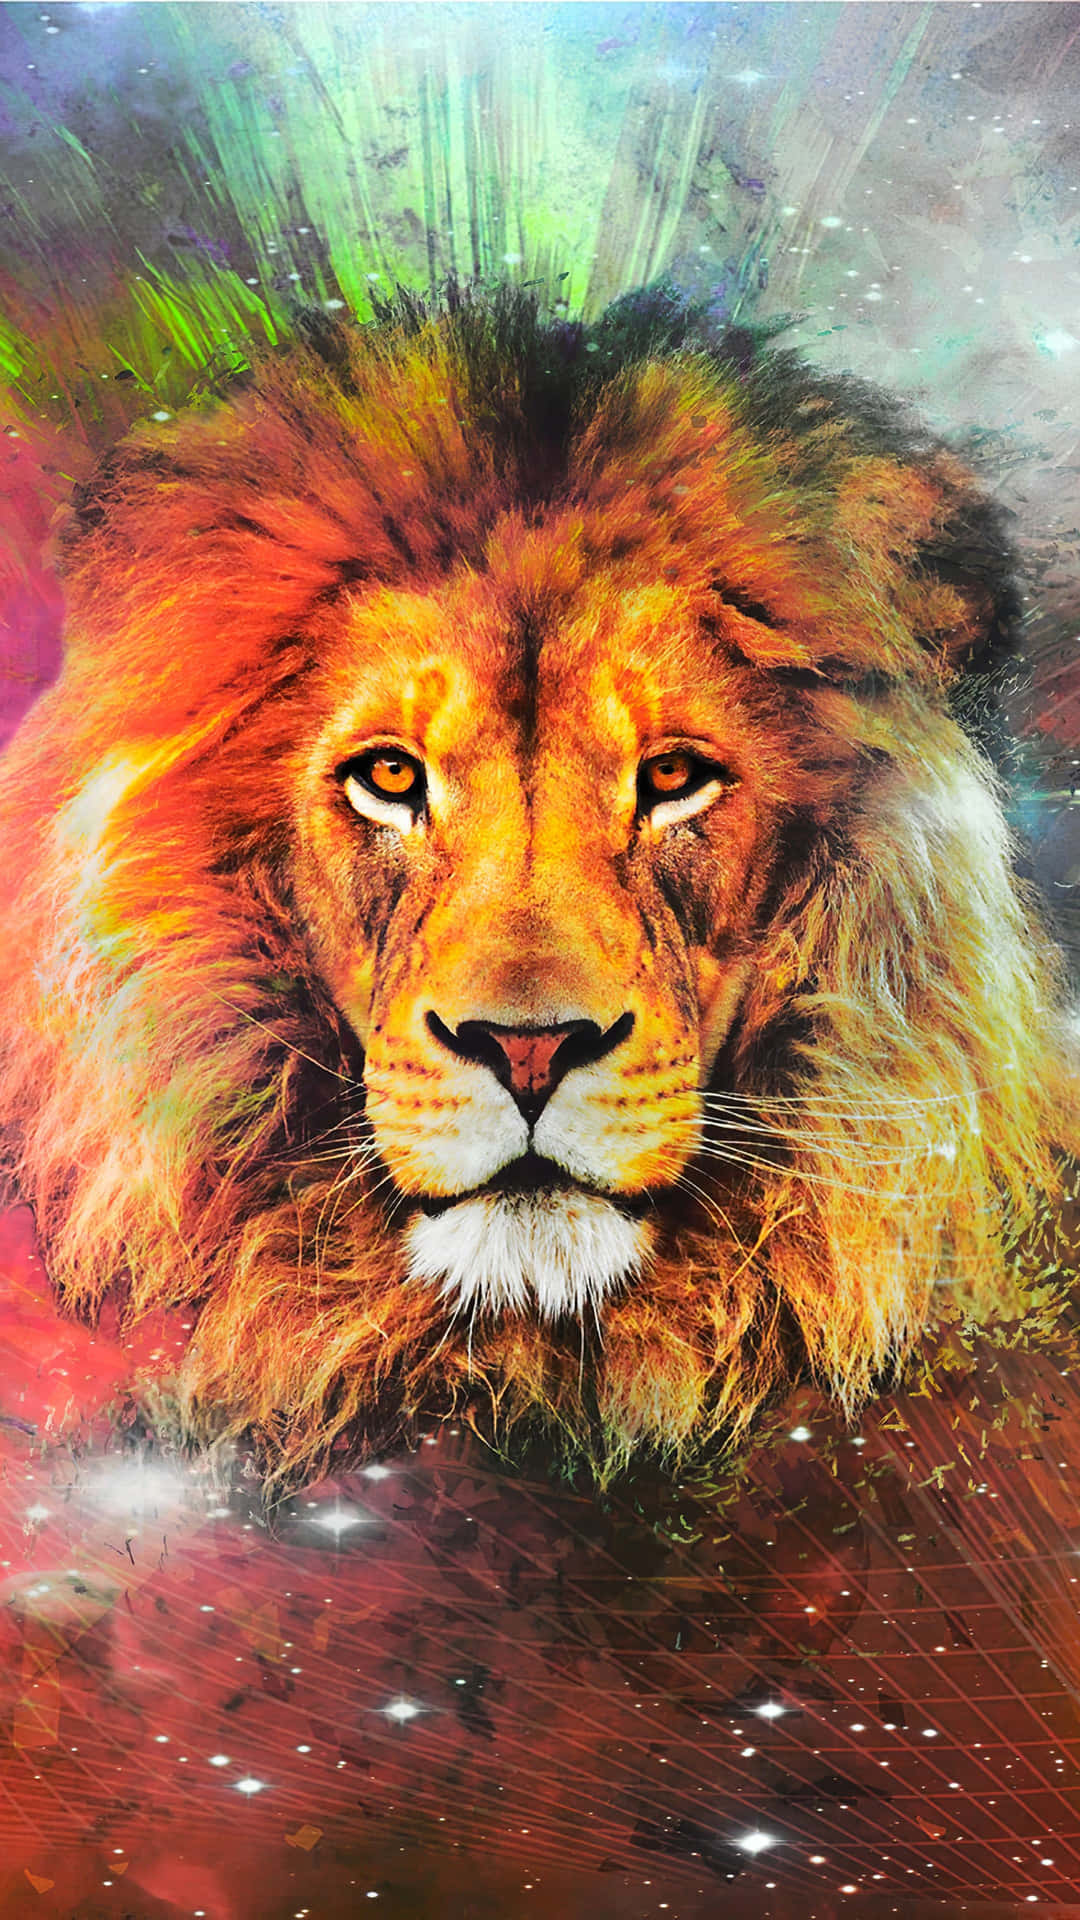 The Majestic Lion of Judah